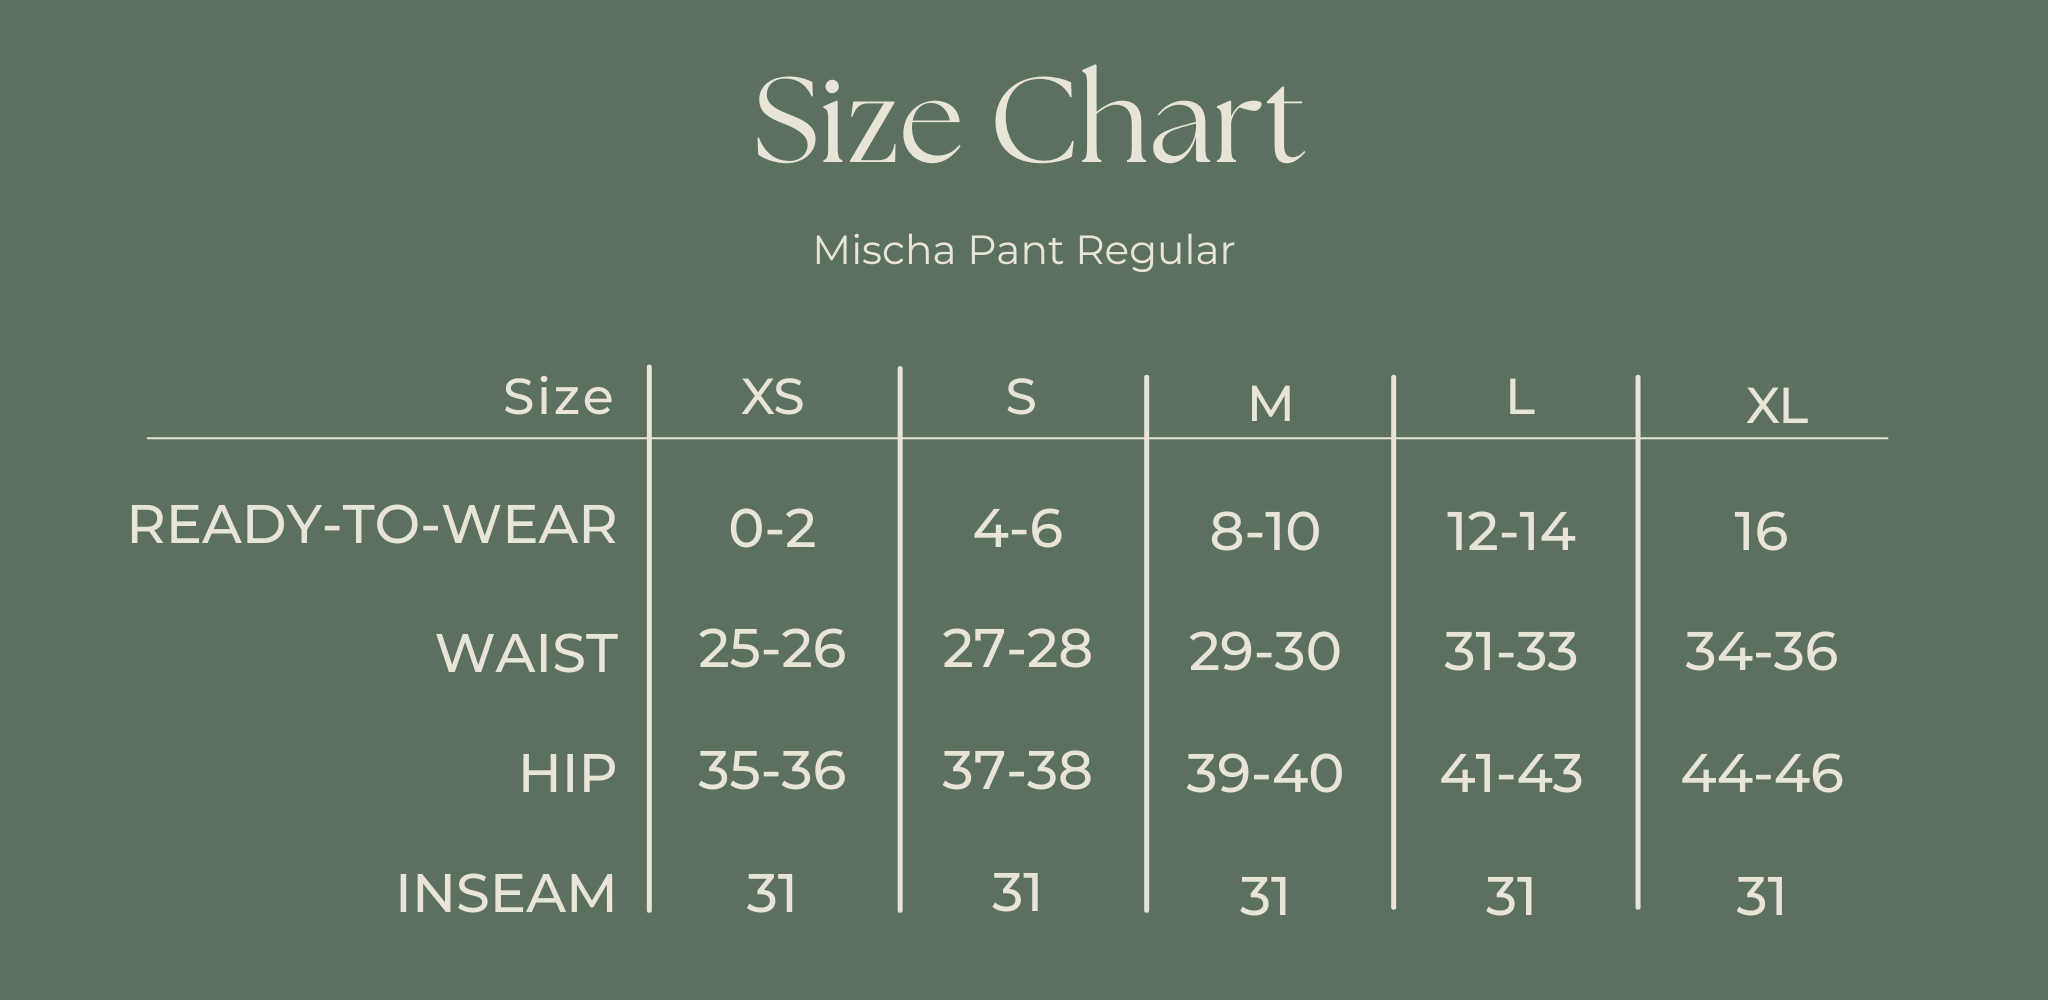 Mischa Pant Regular Size Chart 11/8/2022